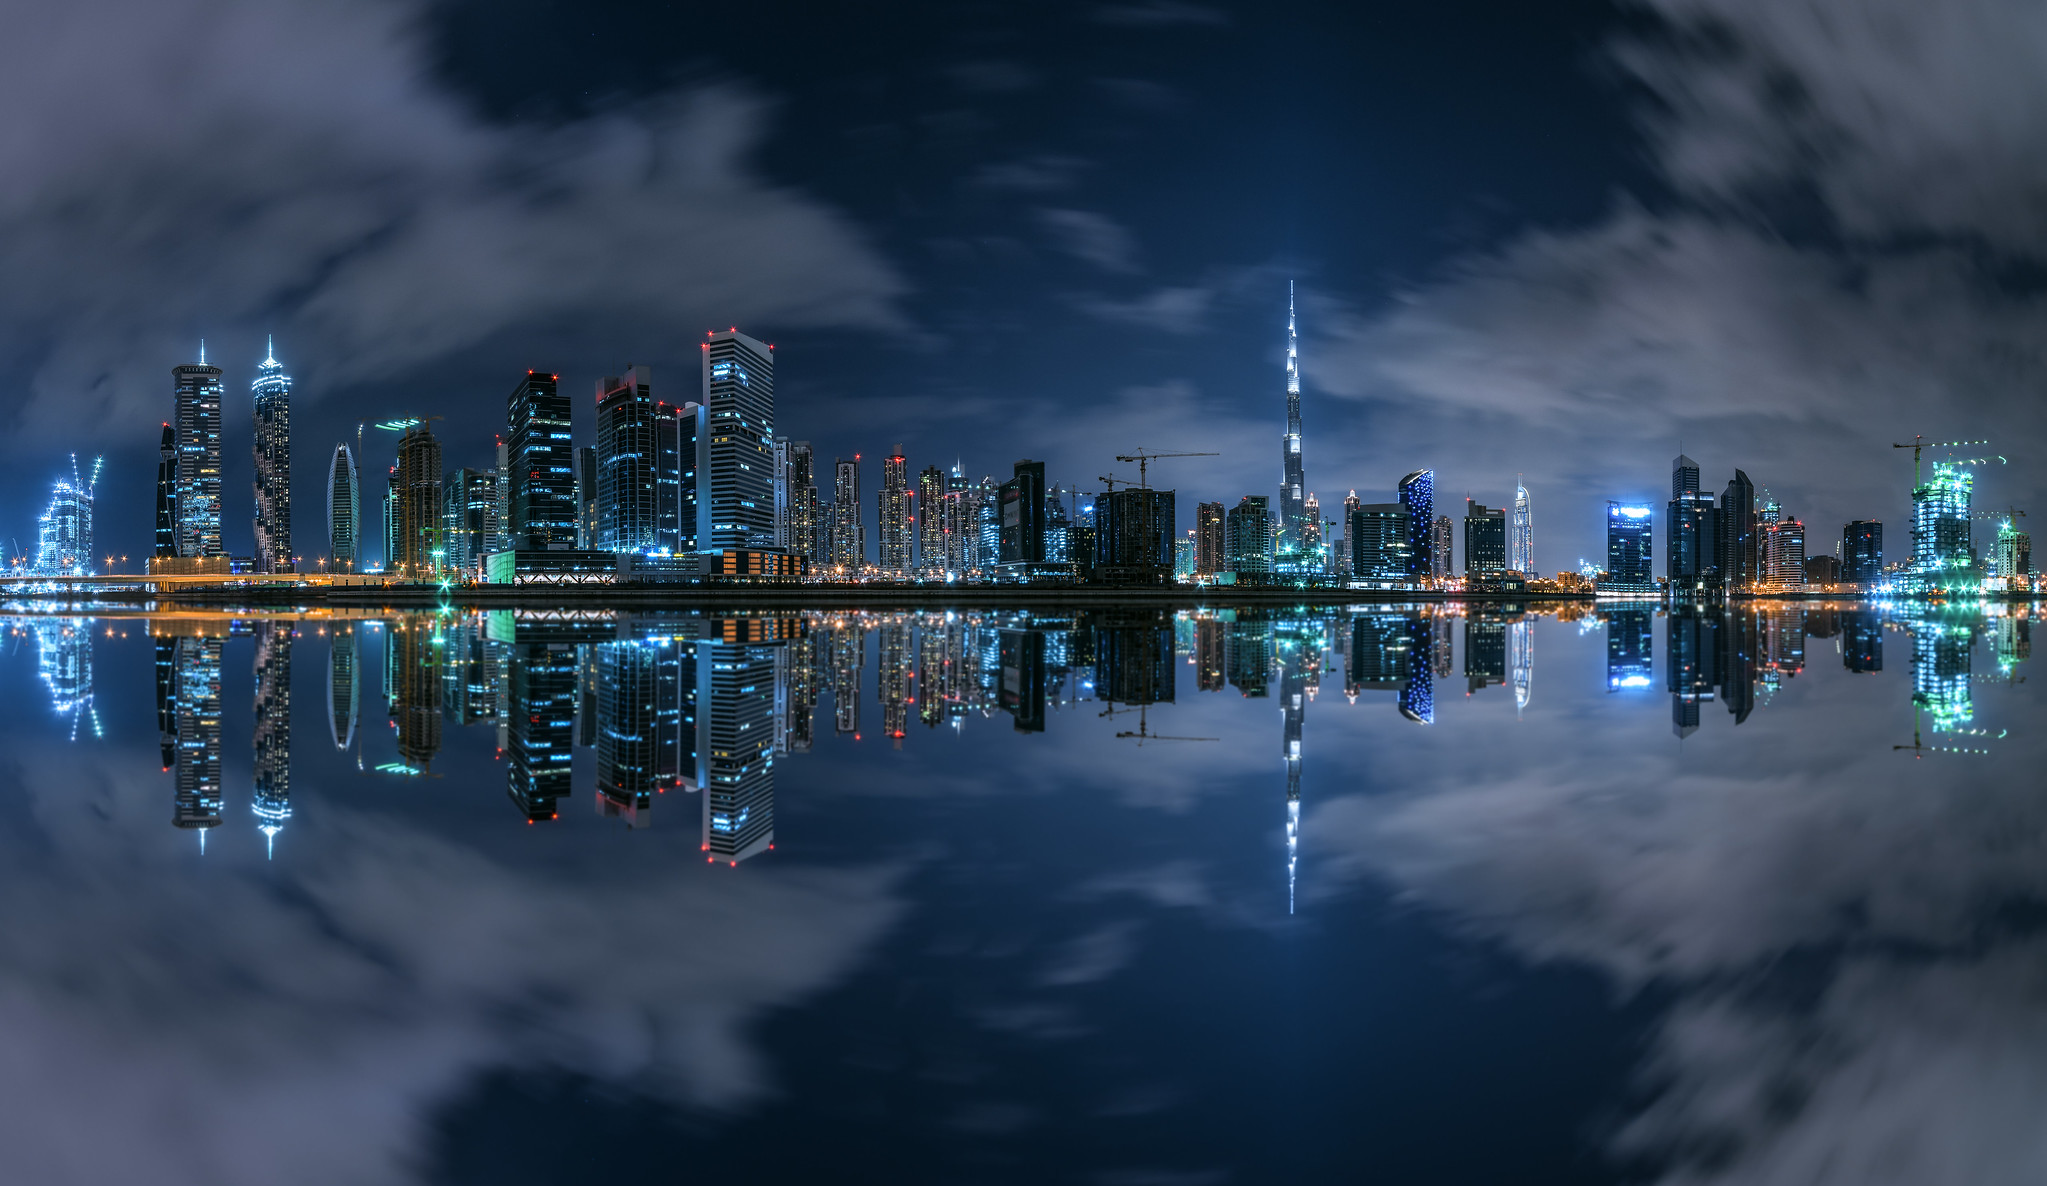 Wallpaper ID: 149293 / city, cityscape, building, skyscraper, tilt shift,  Burj Khalifa, Dubai, night, city lights, depth of field Wallpaper